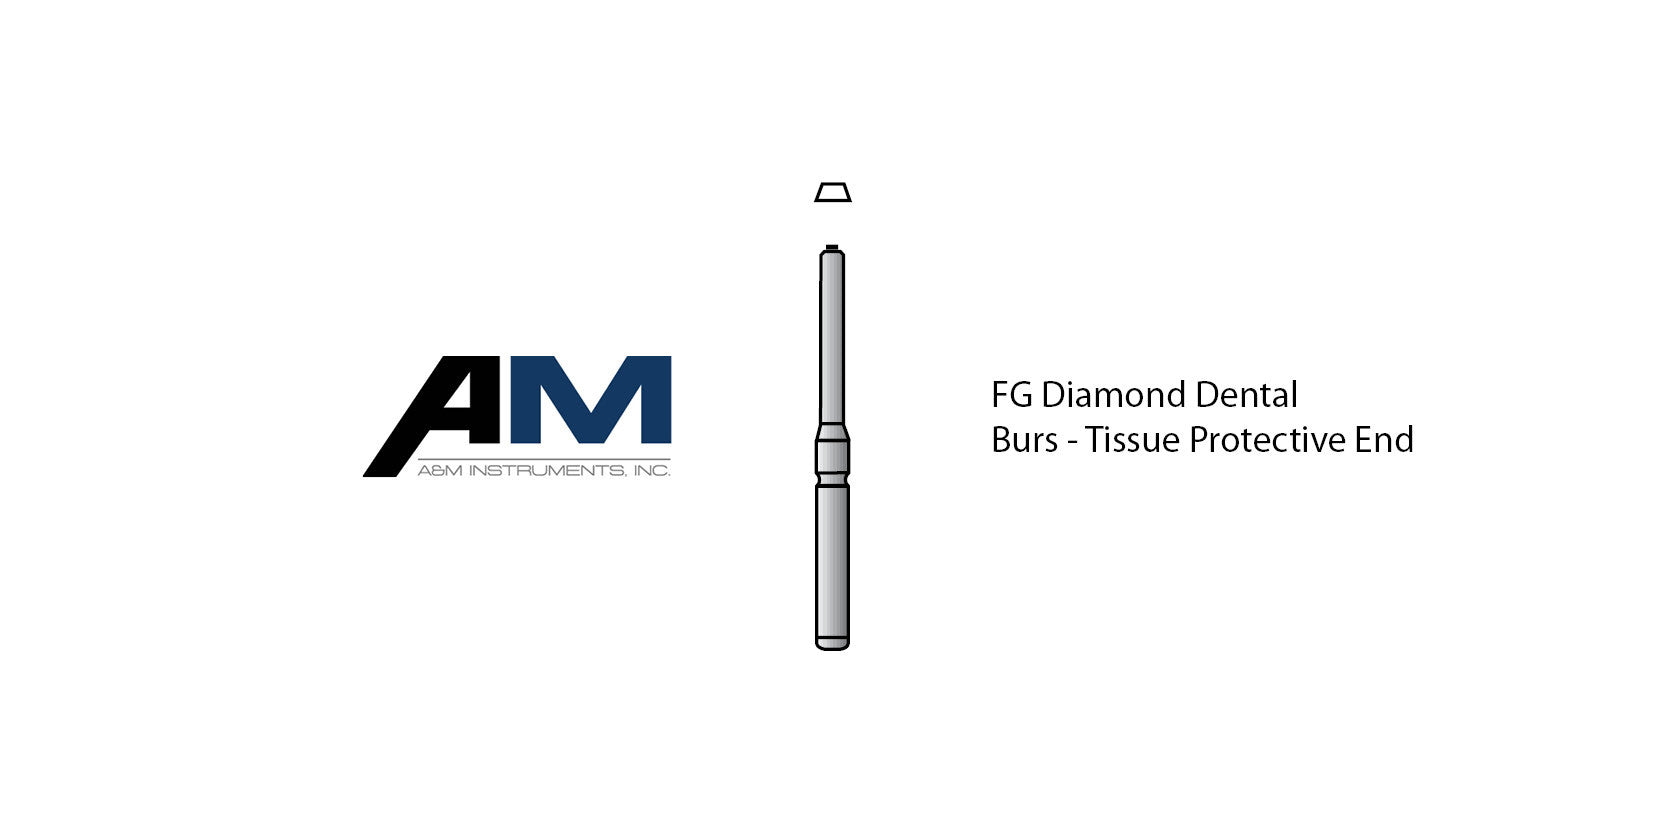 FG Diamond Dental Burs - Tissue Protective End